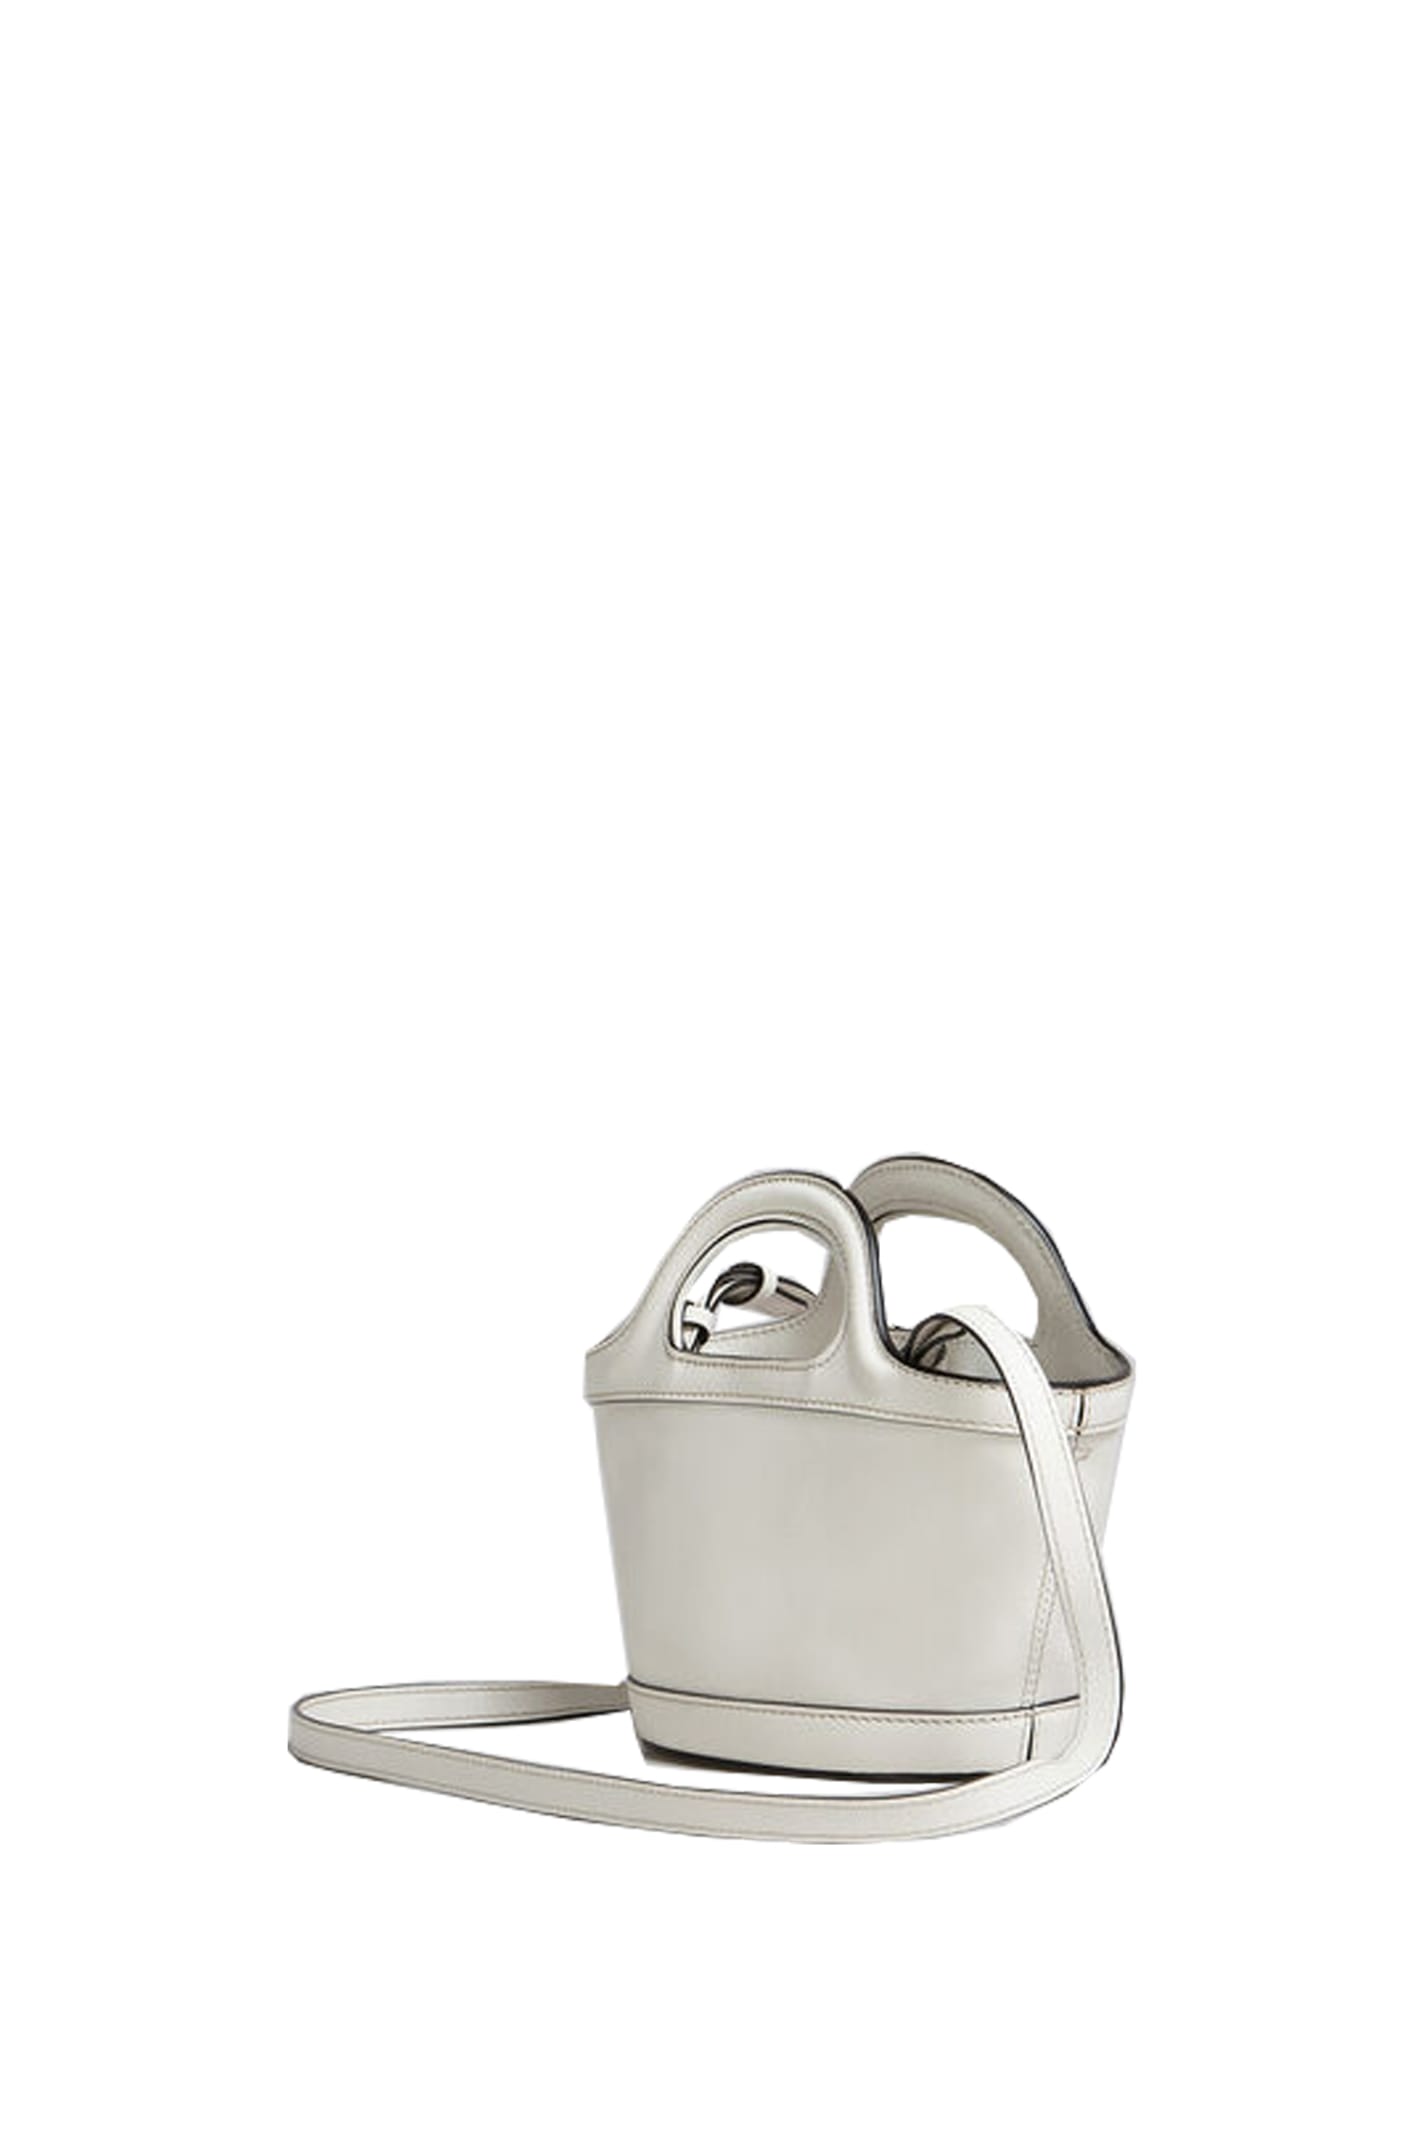 Shop Marni Handbags In White